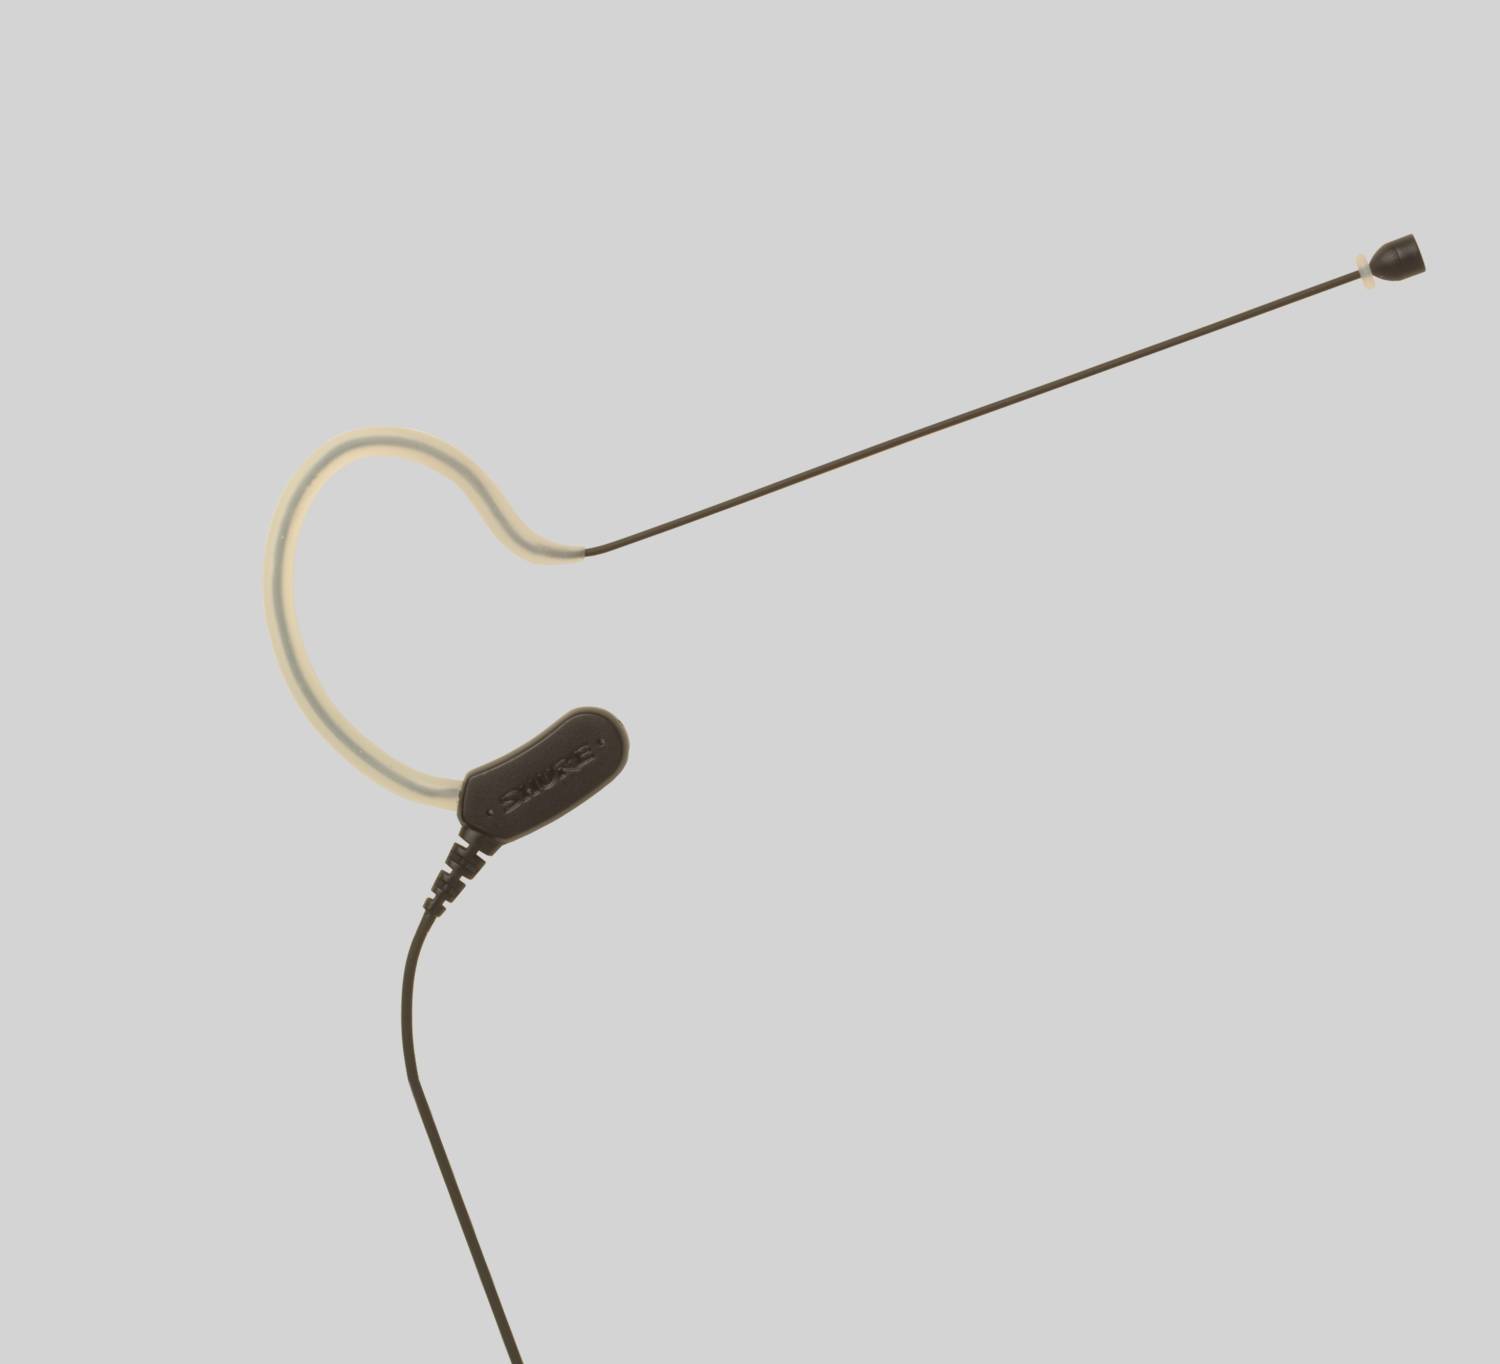 MX153 - Earset Headworn Microphone